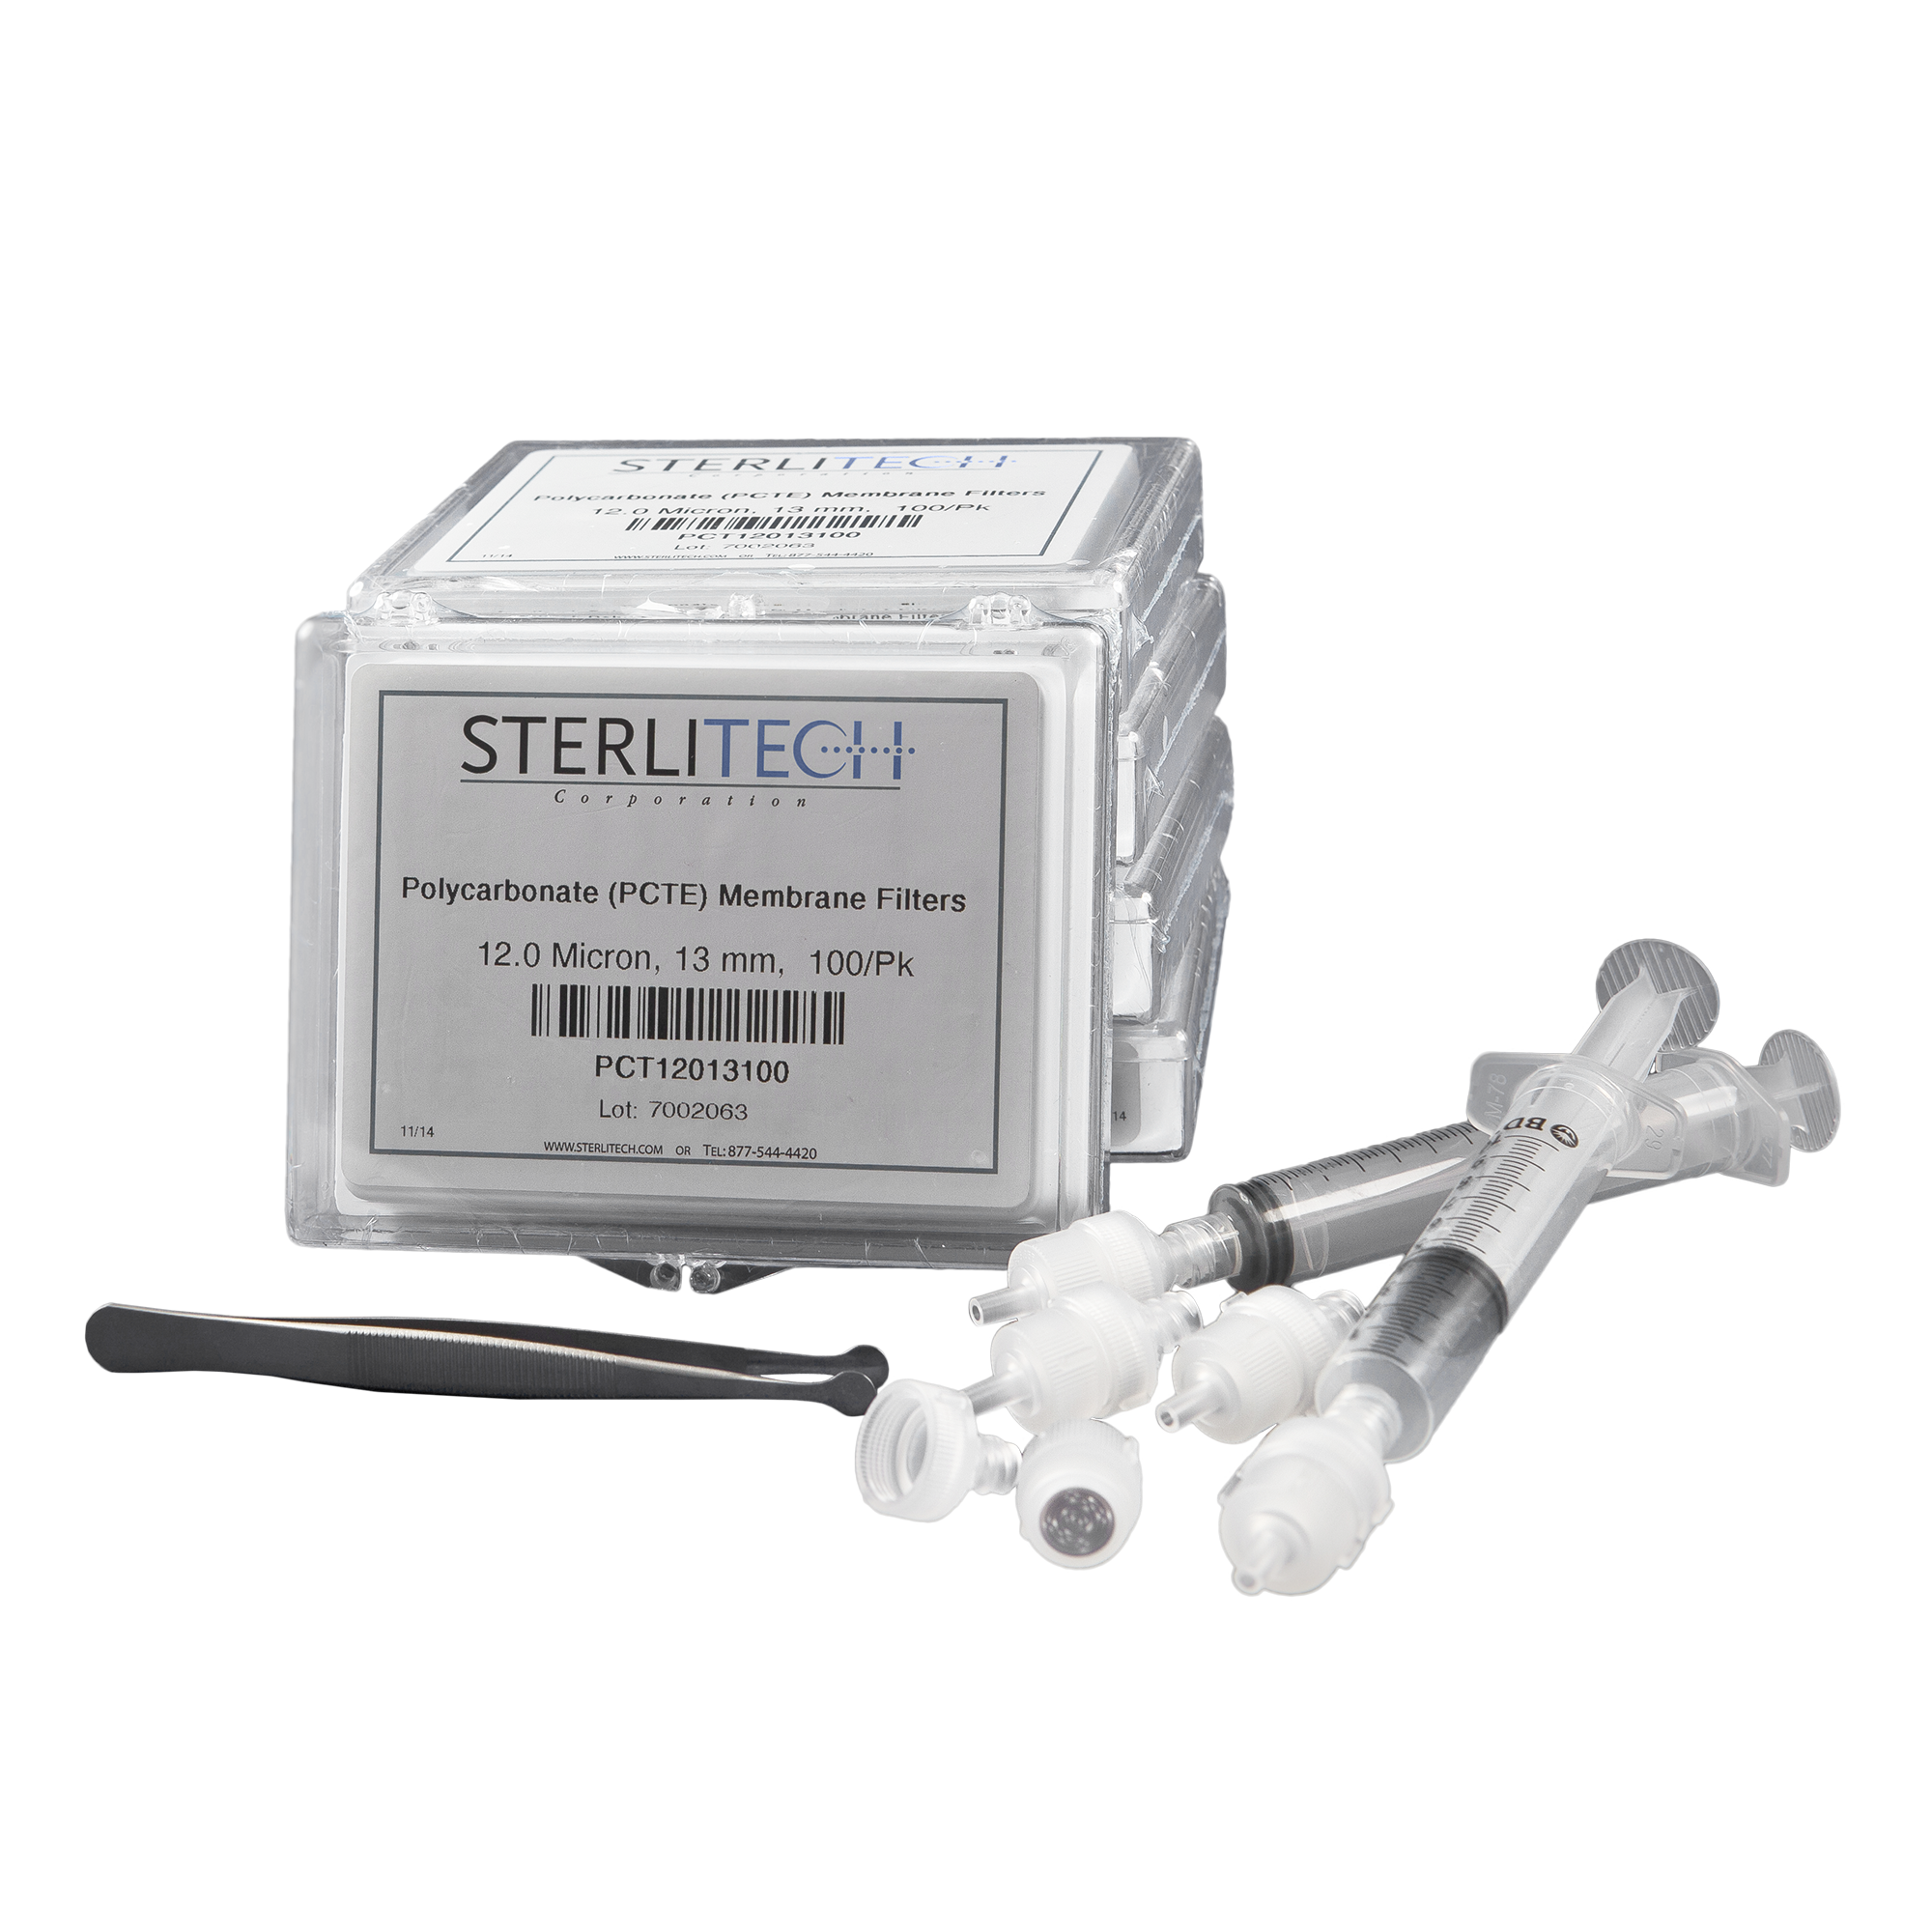 Using the Sterlitech Schistosome Test Kit